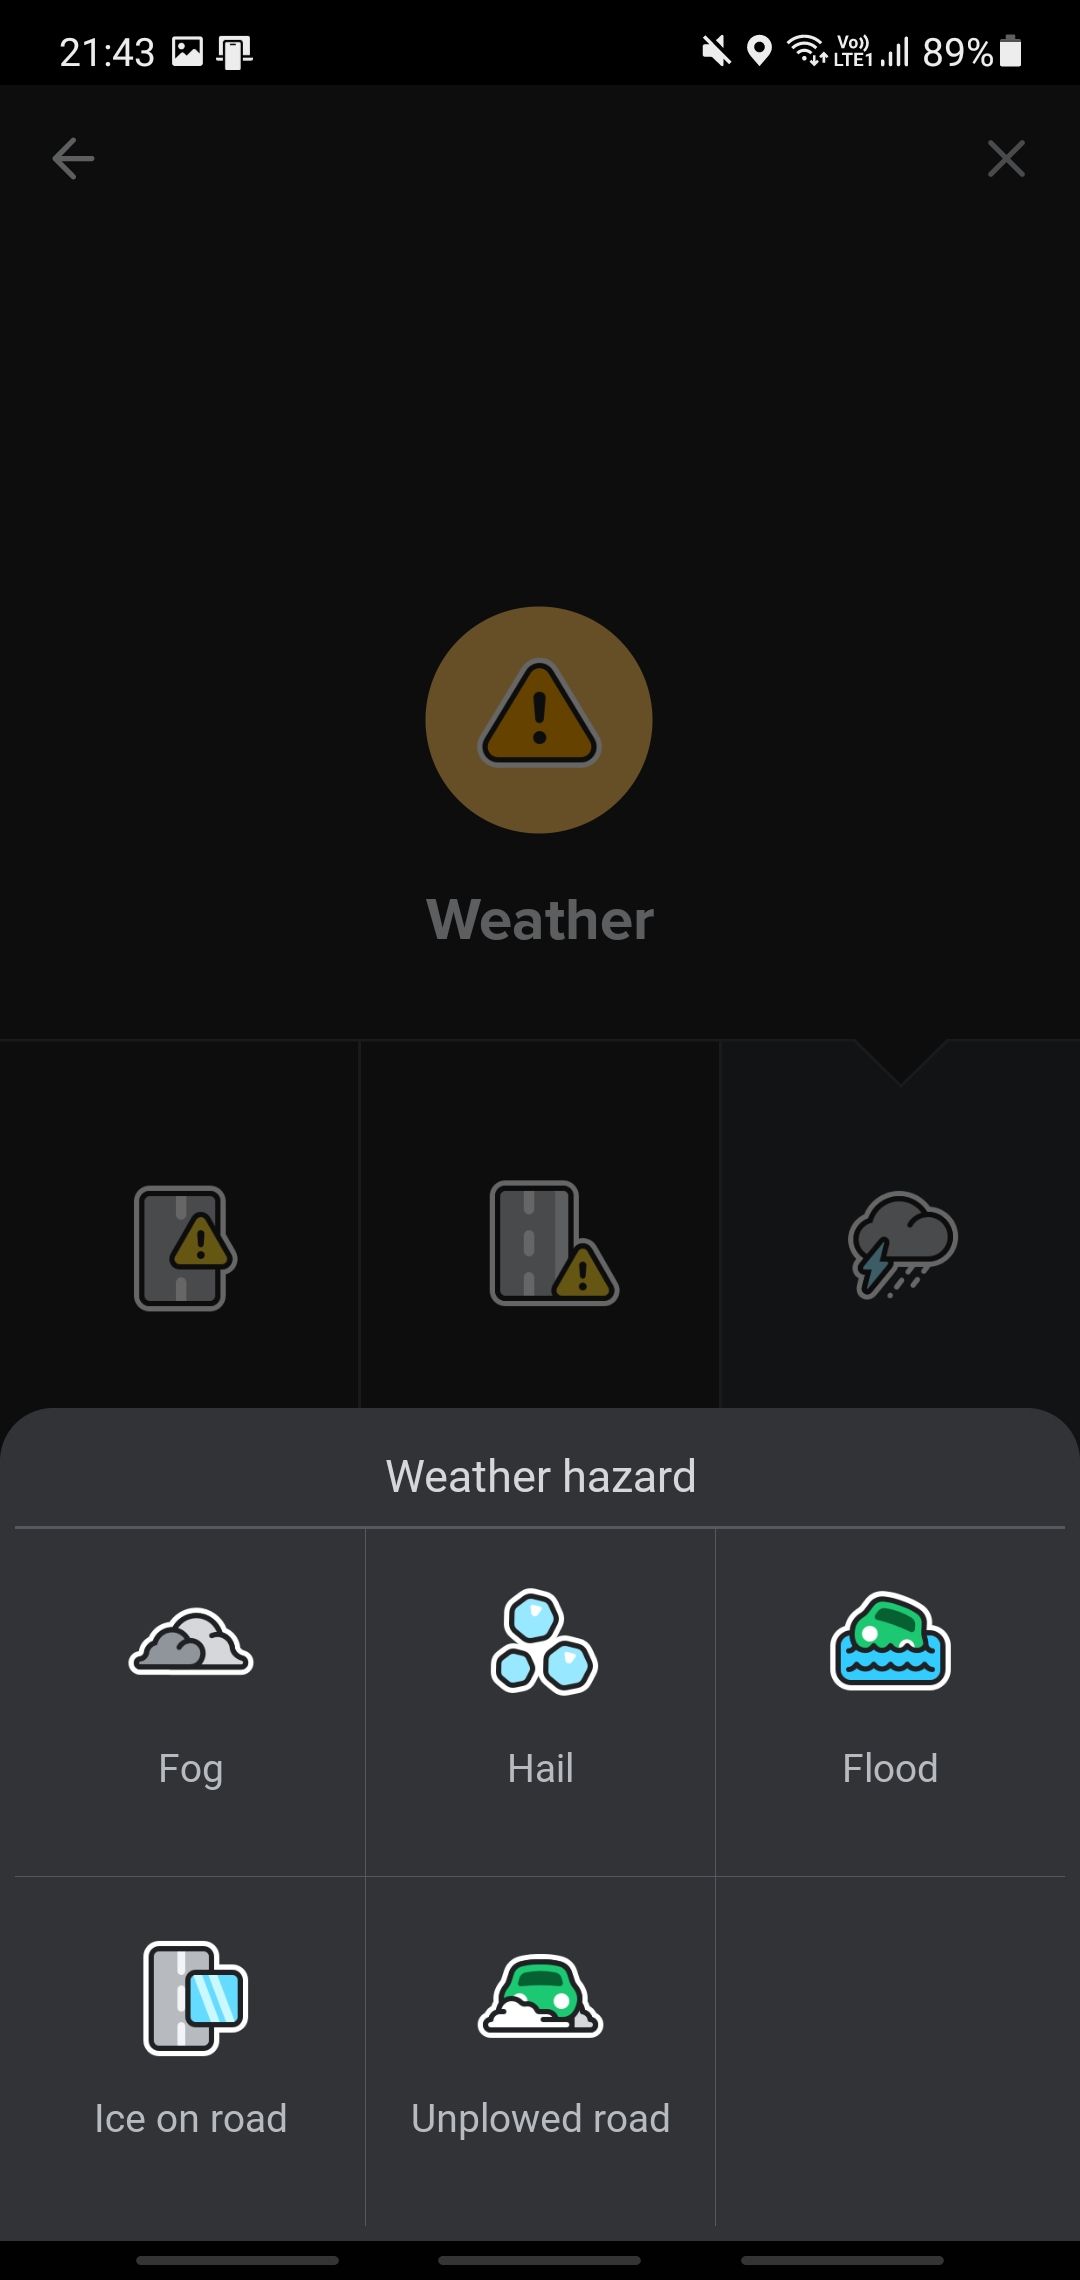 Reporting Weather Hazards on Waze